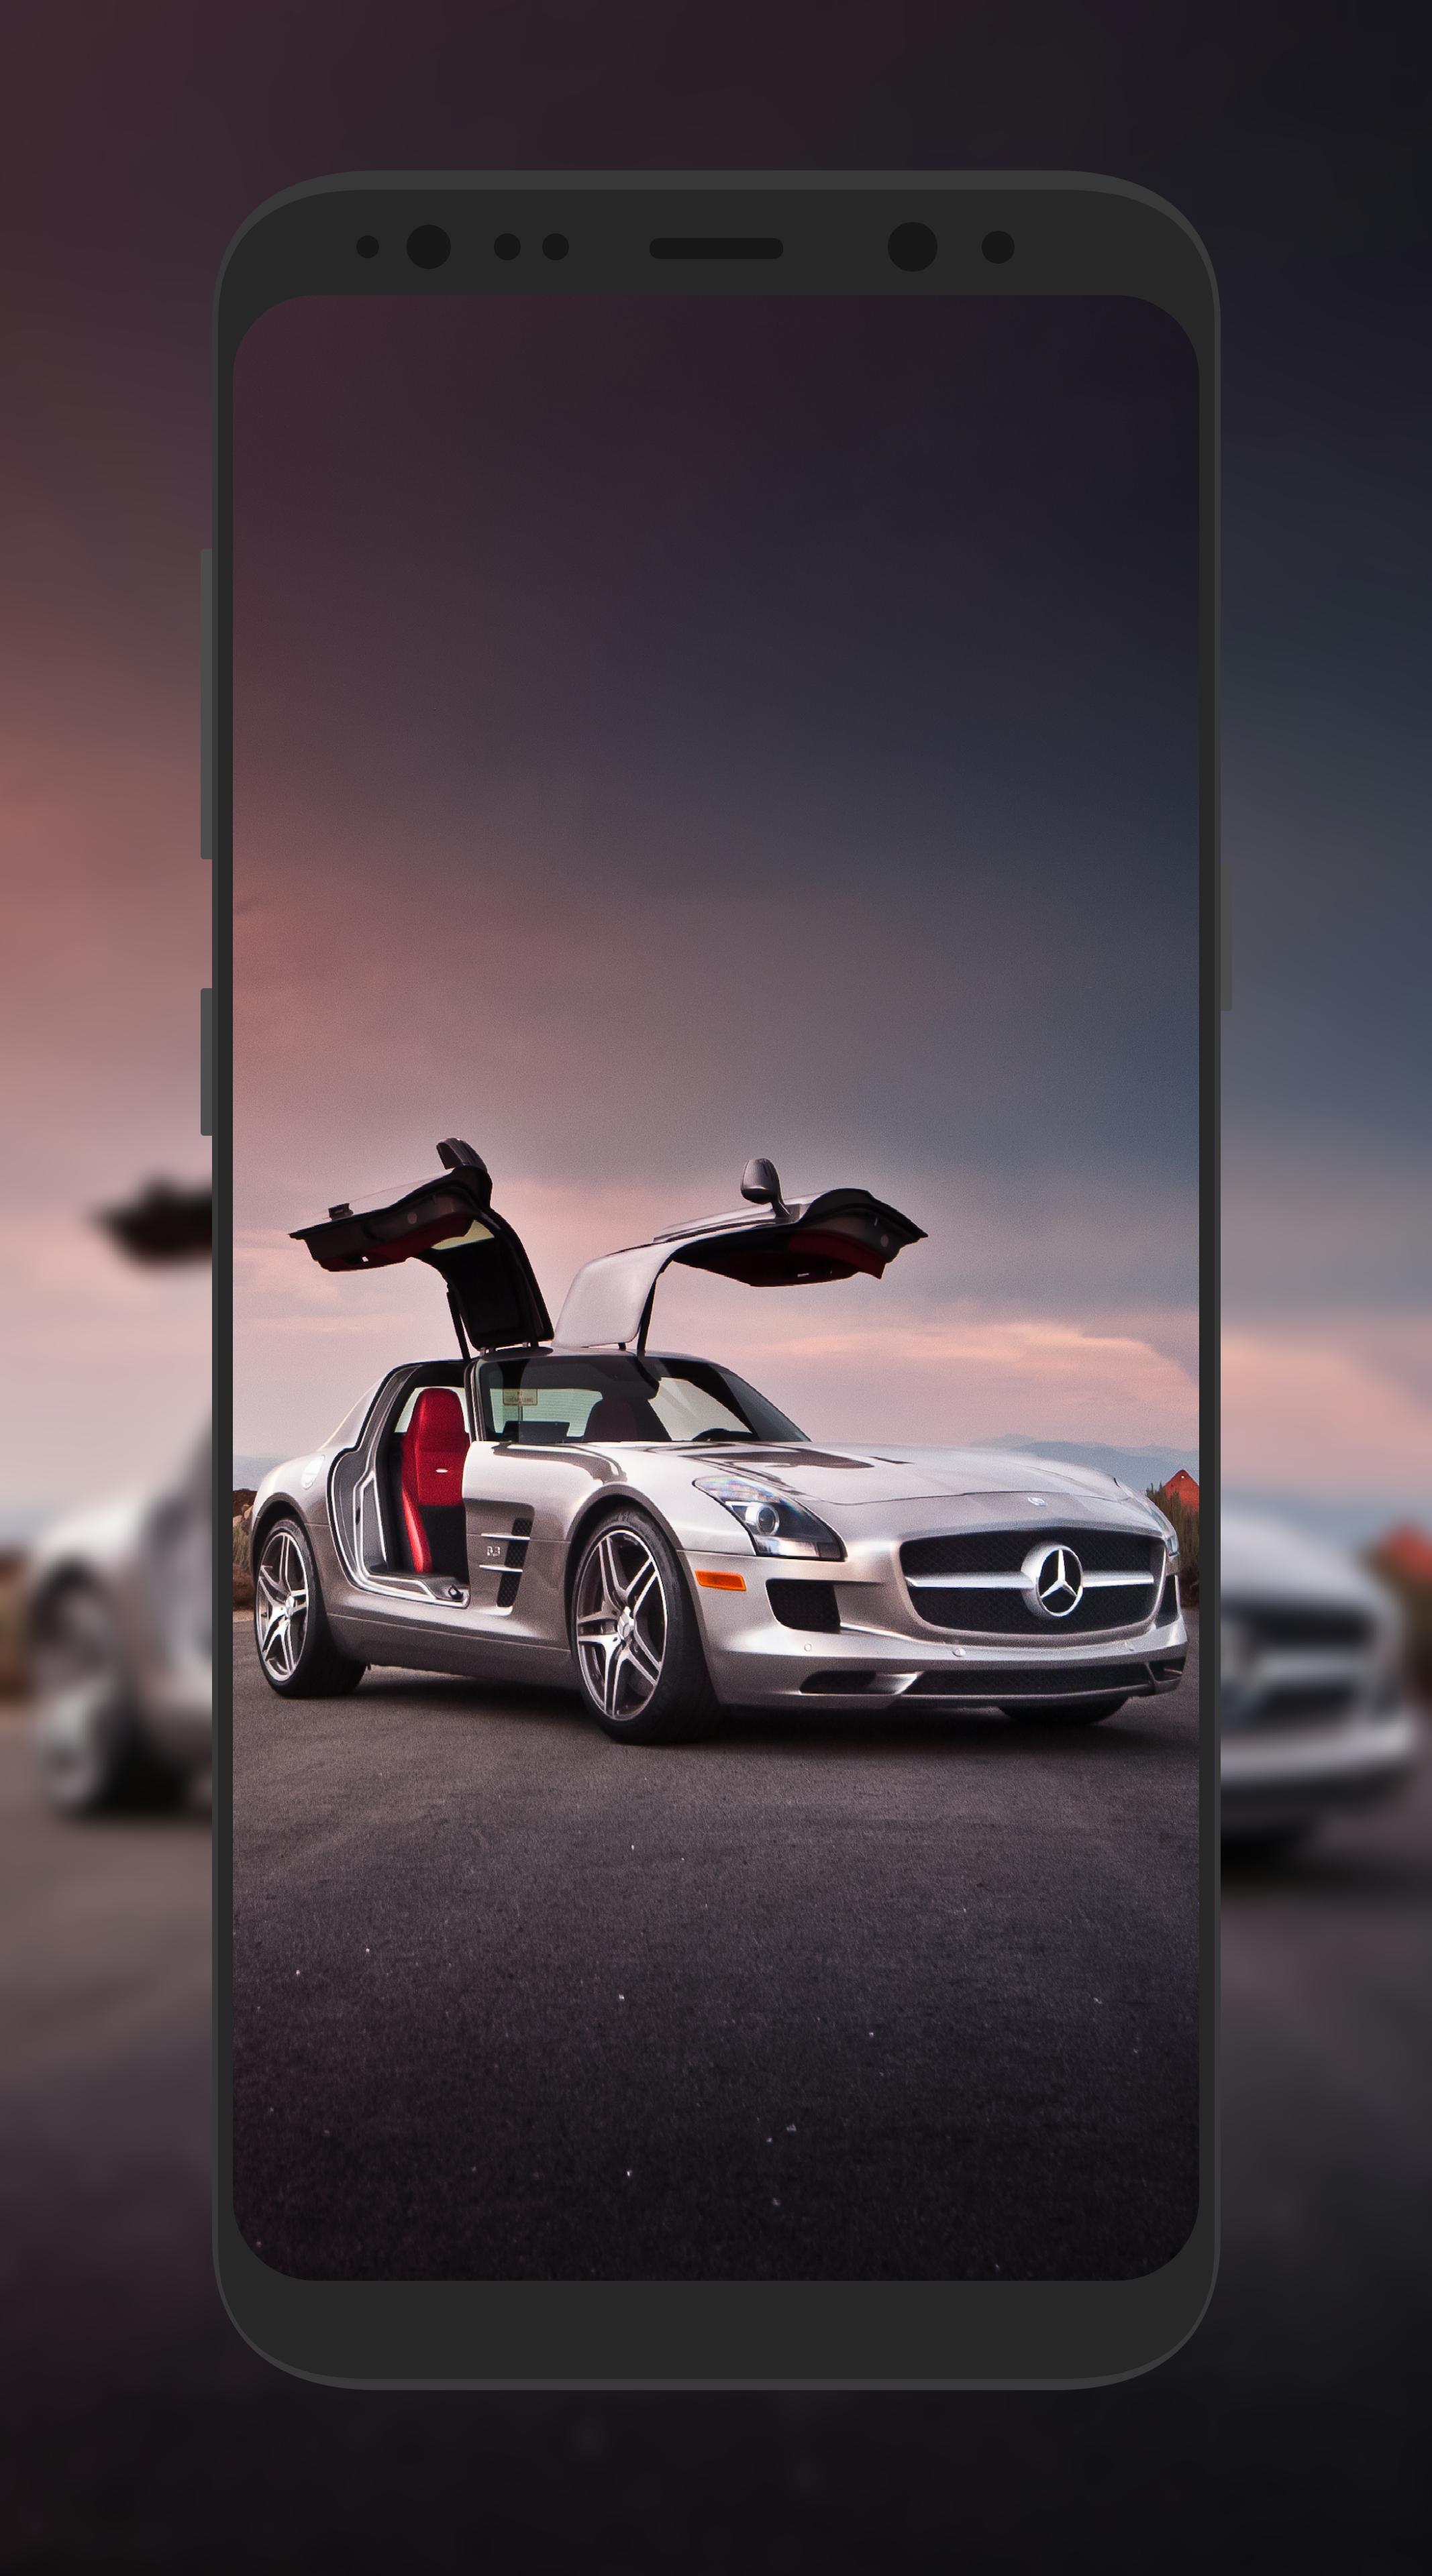 Top Car Wallpaper - Auto Wallpaper for Android - APK Download